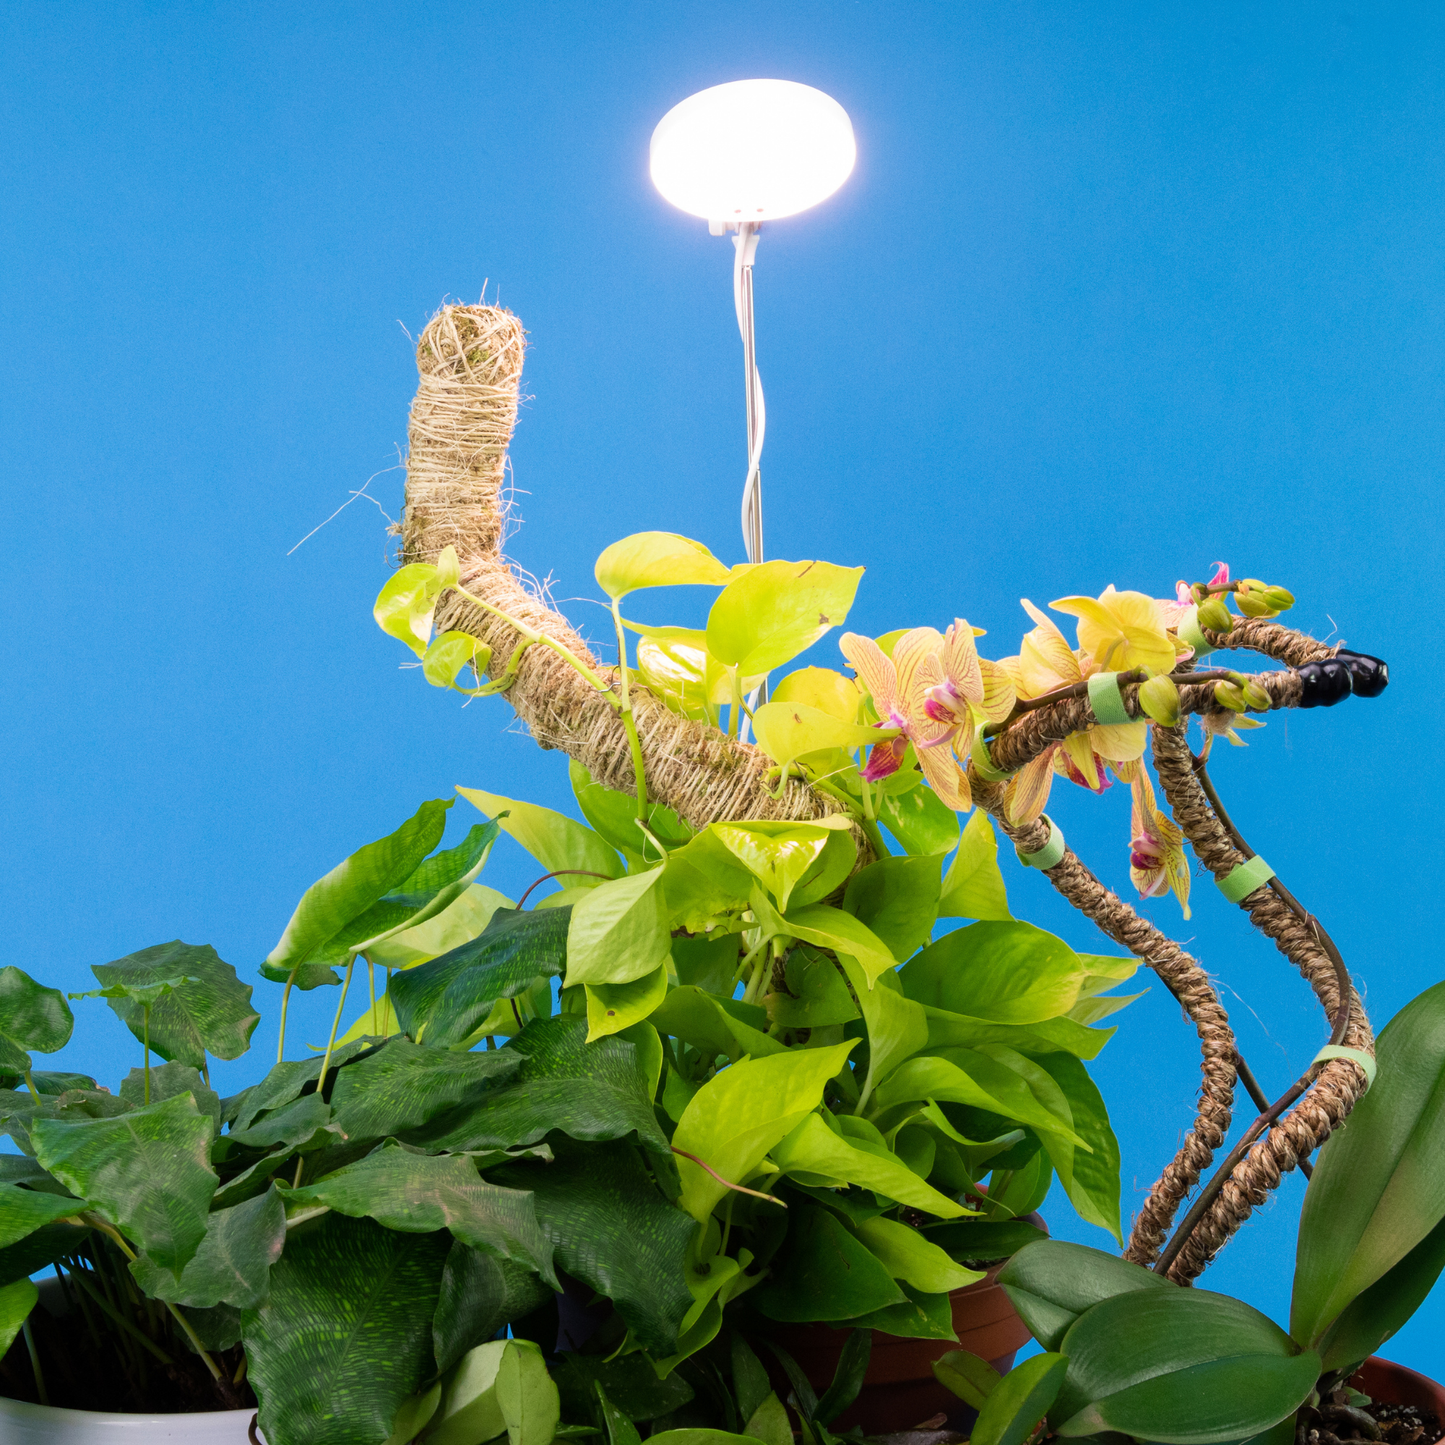 Adjustable LED Plant Light: White